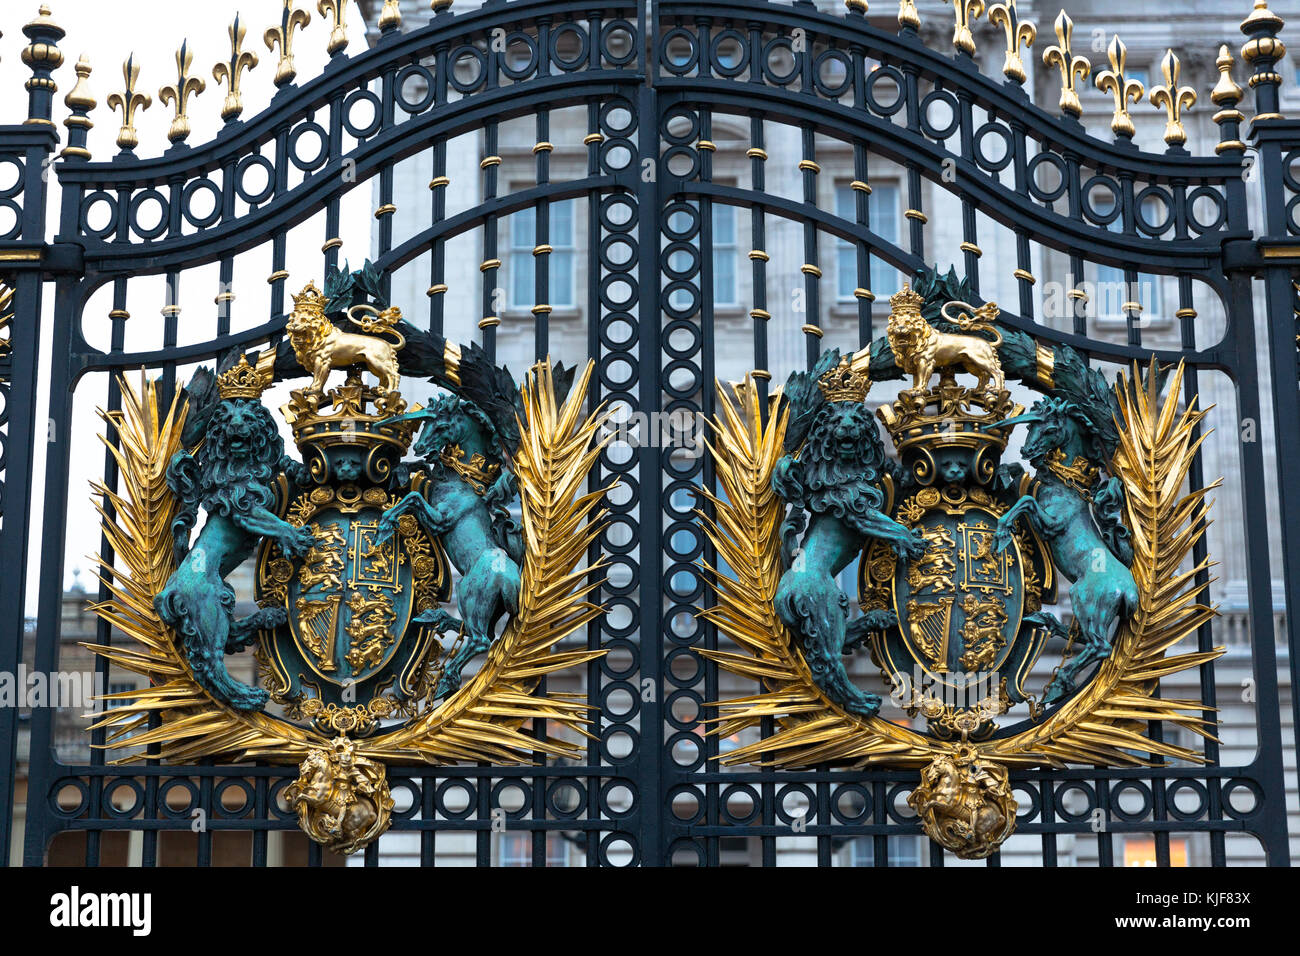 Detail shot of the gates at Buckingham Palace showing Royal Coat of Arms - London, UK Stock Photo